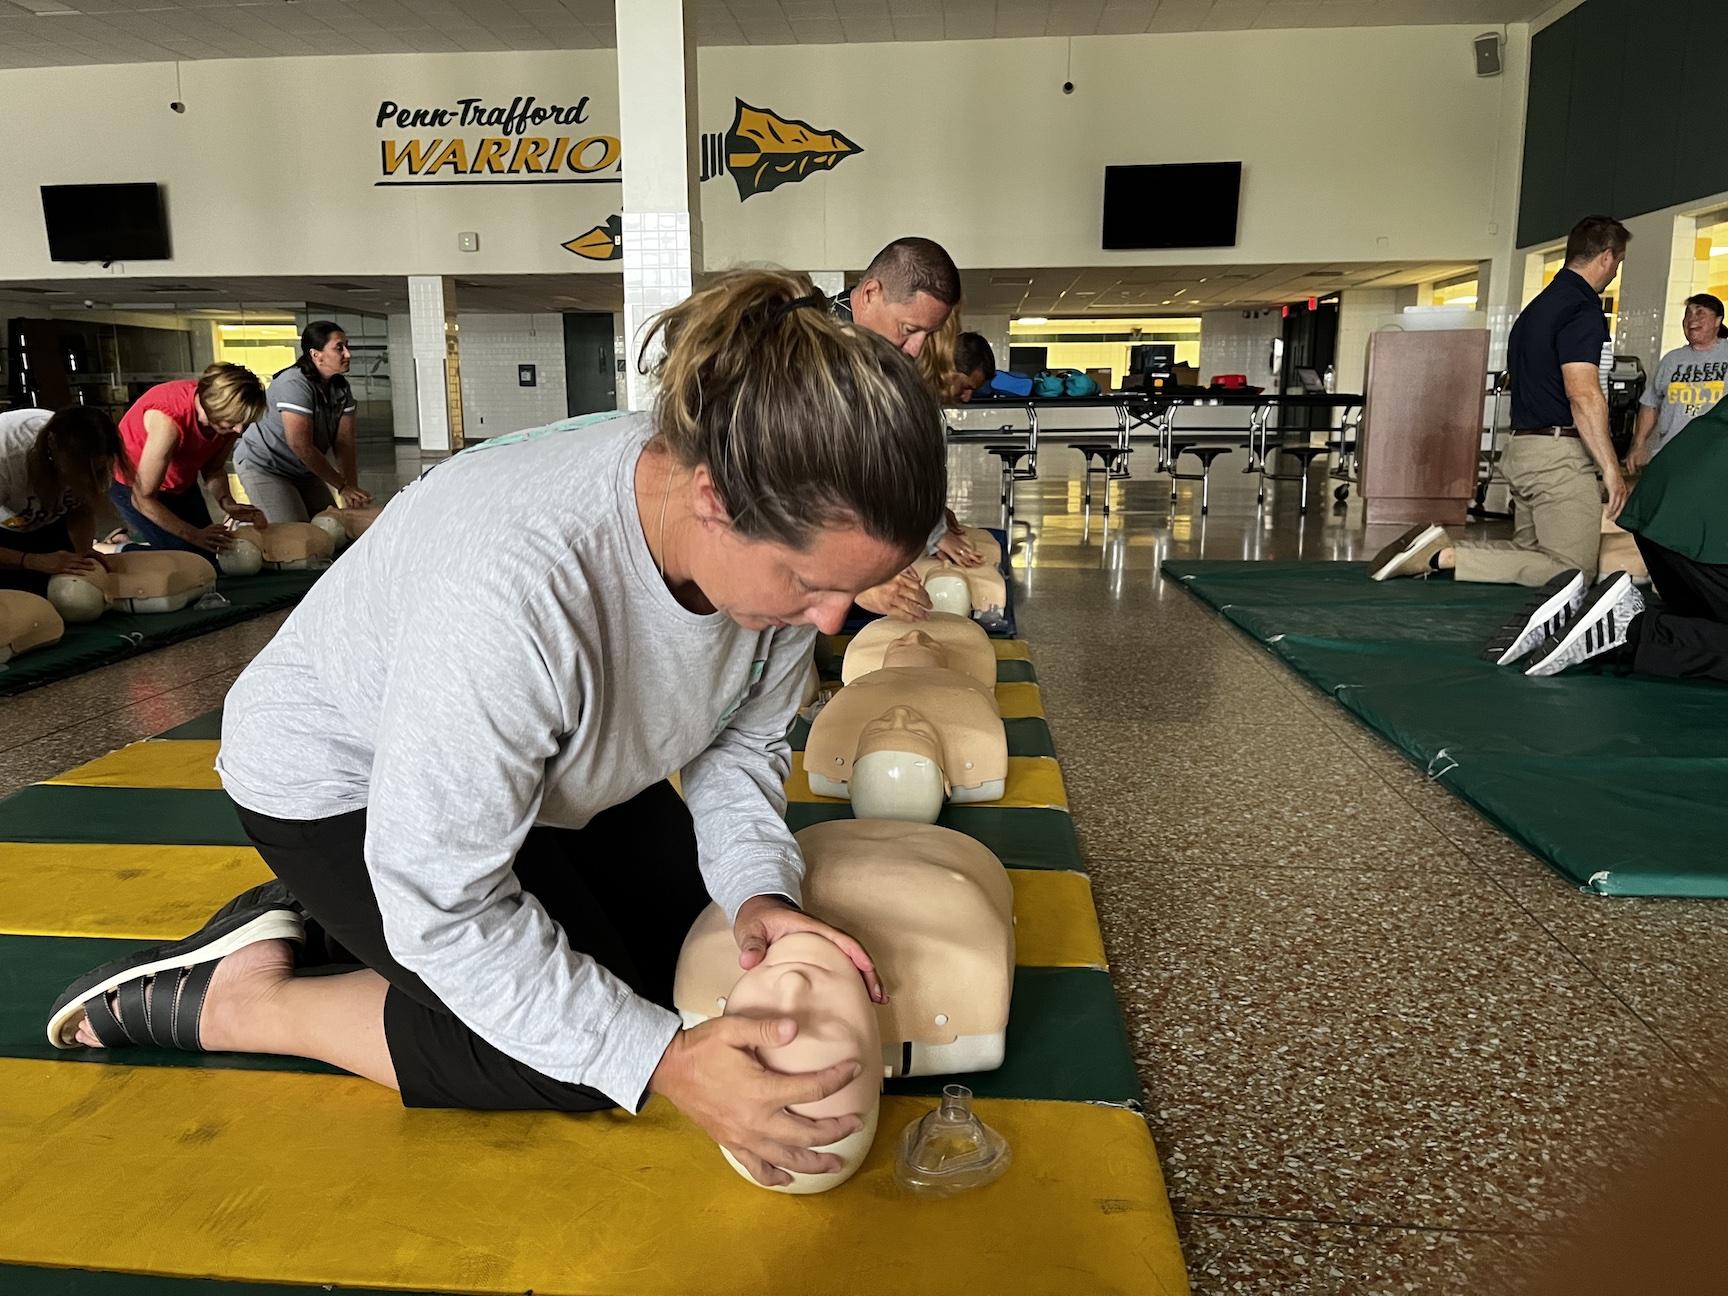 Dr. Kubistek practices hands-only CPR